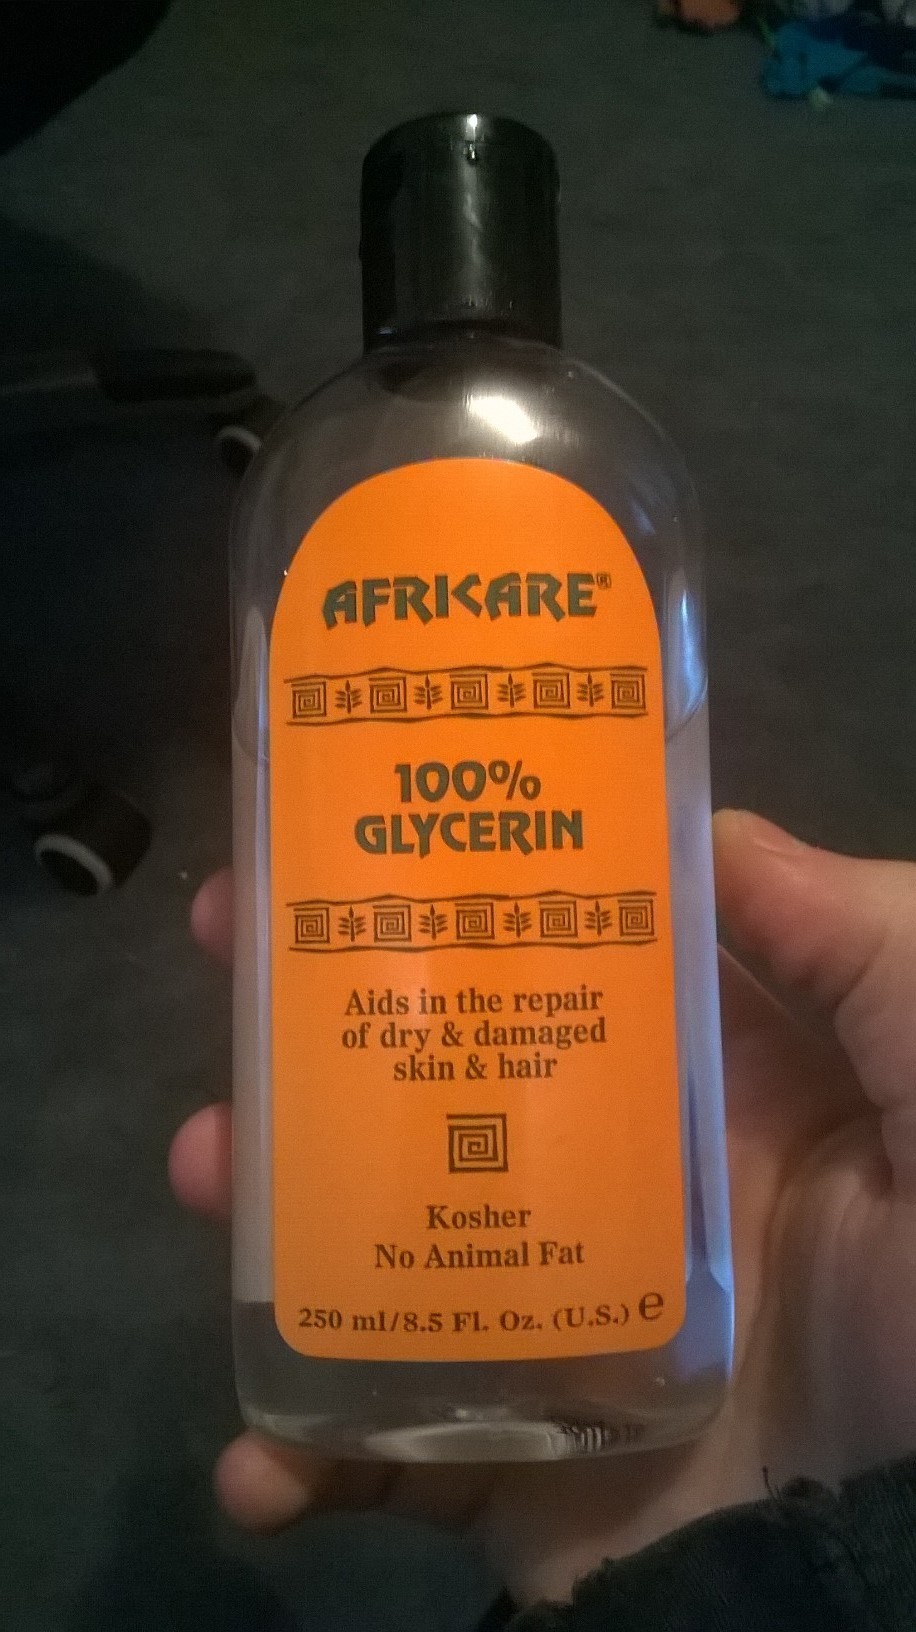 Africare Glycerin, 100% - 8.5 fl oz